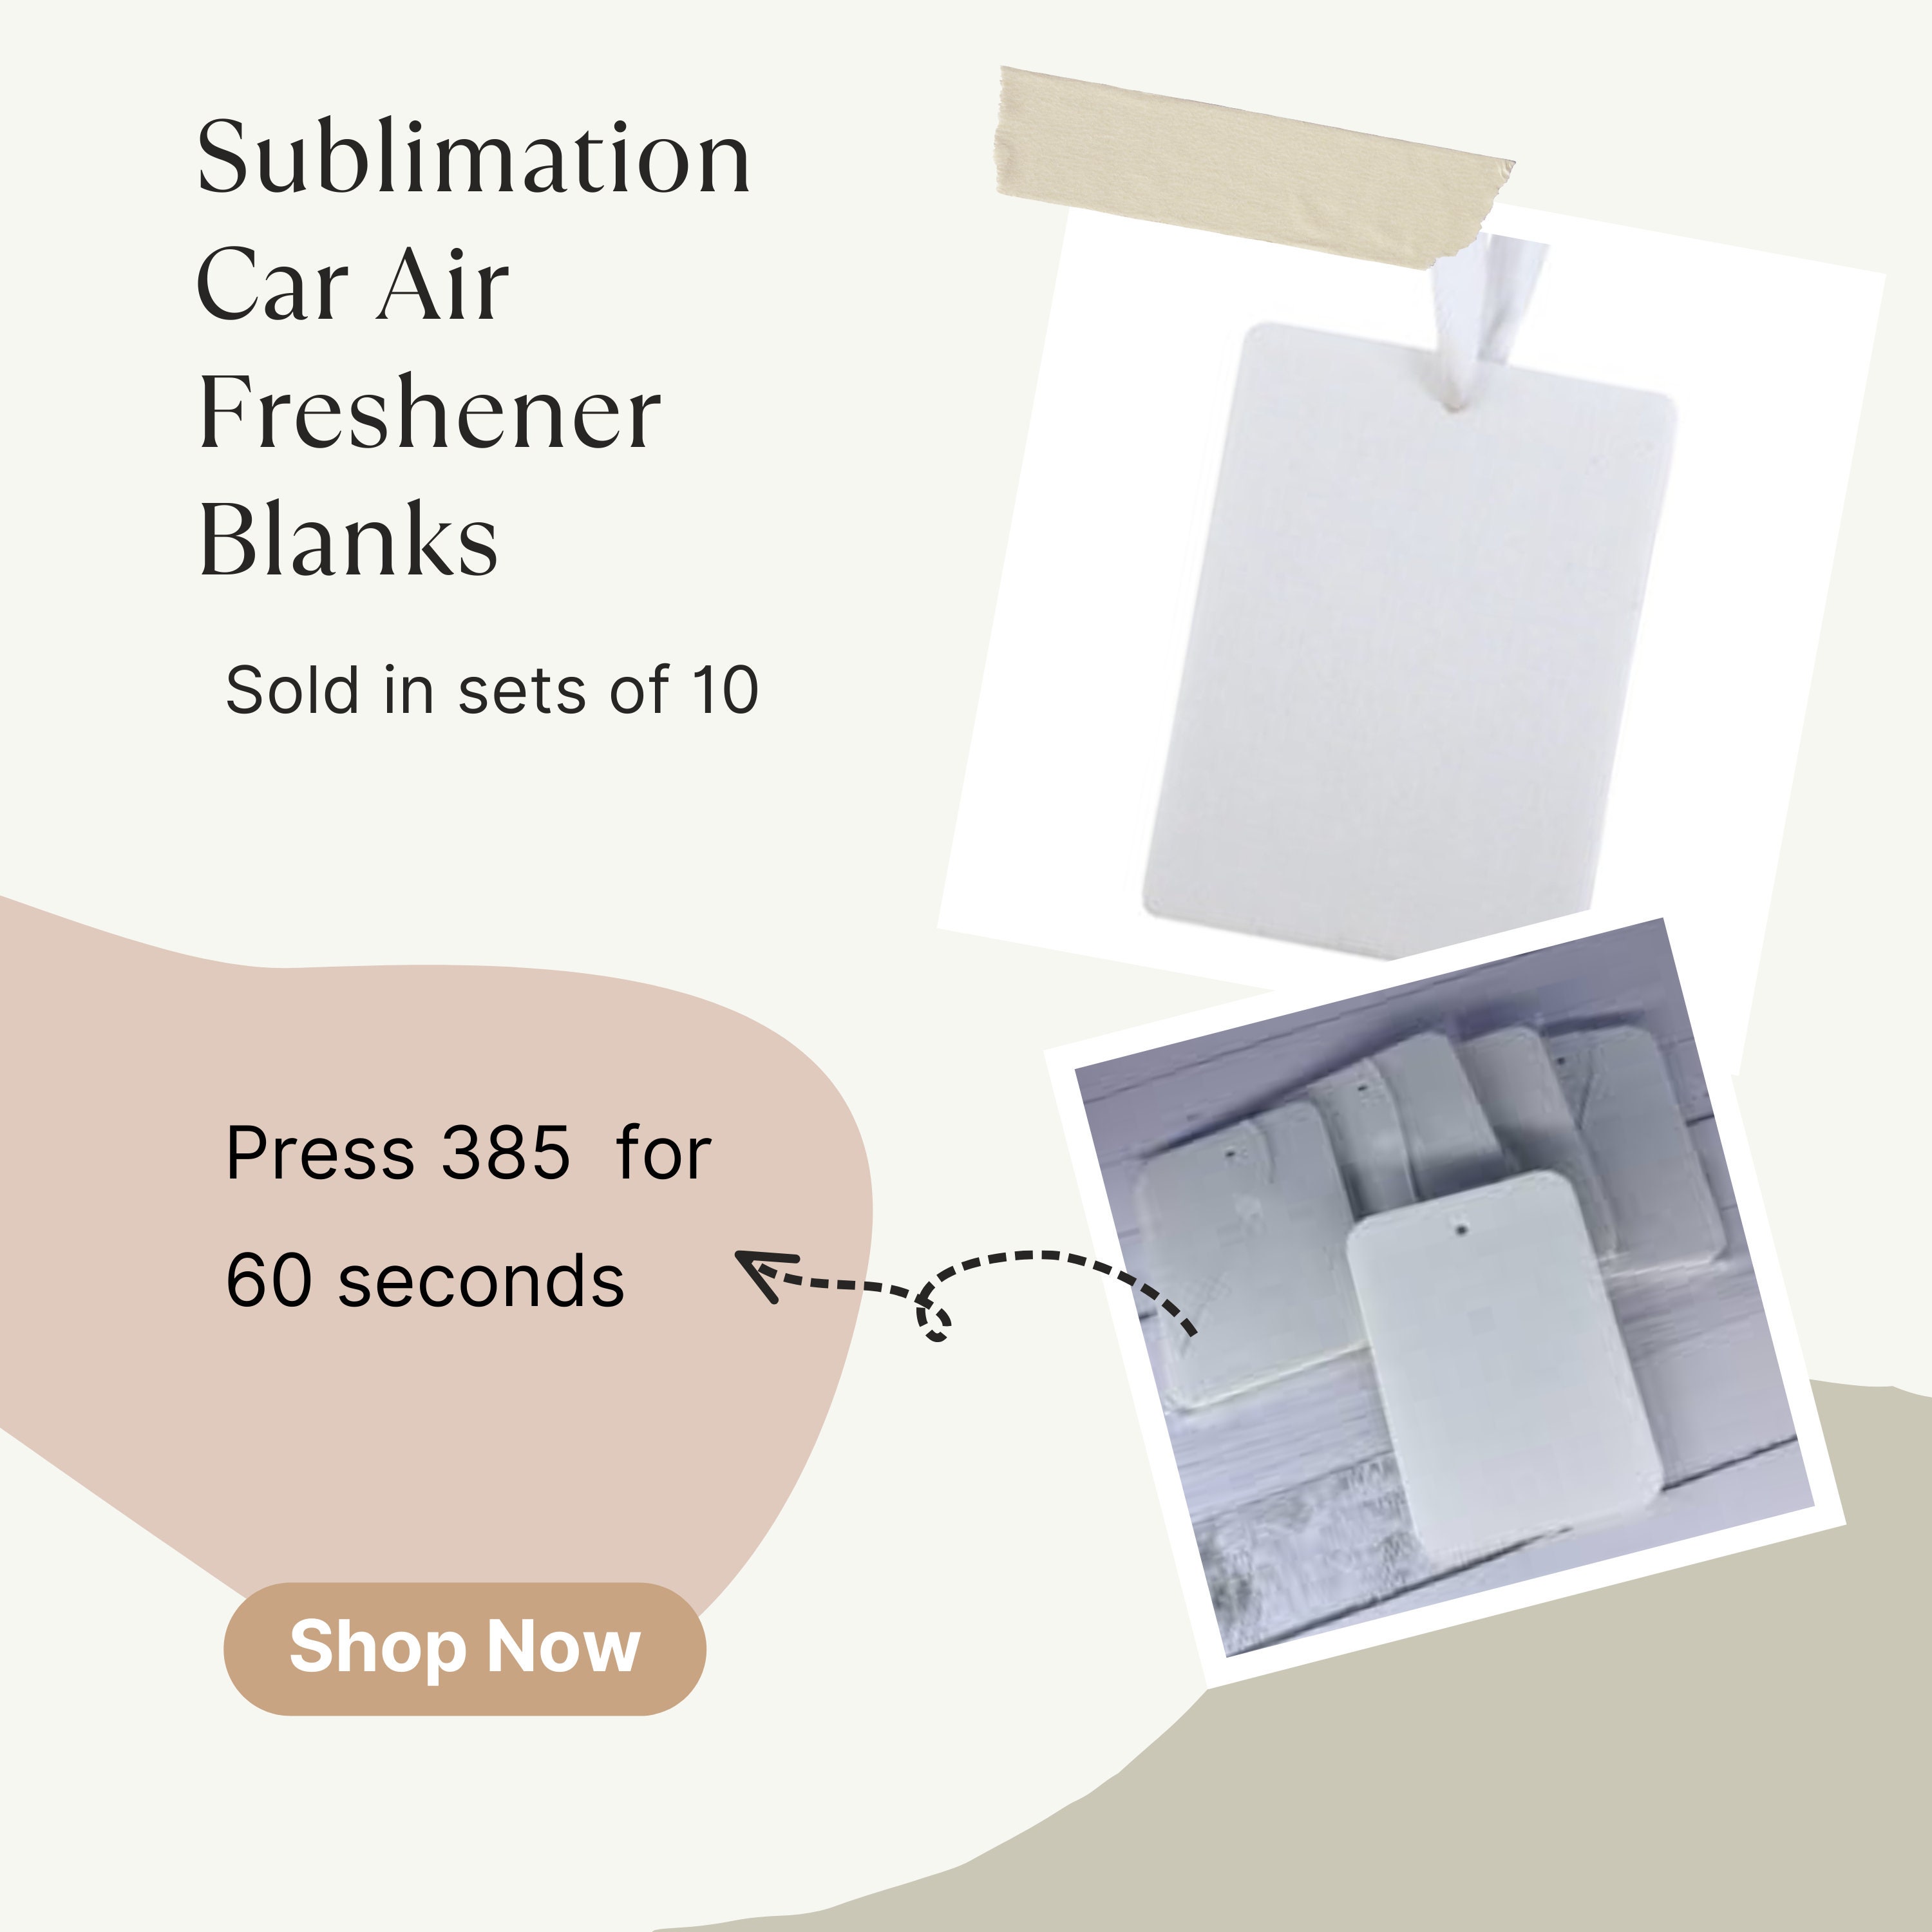 Sublimation Air freshener Blanks